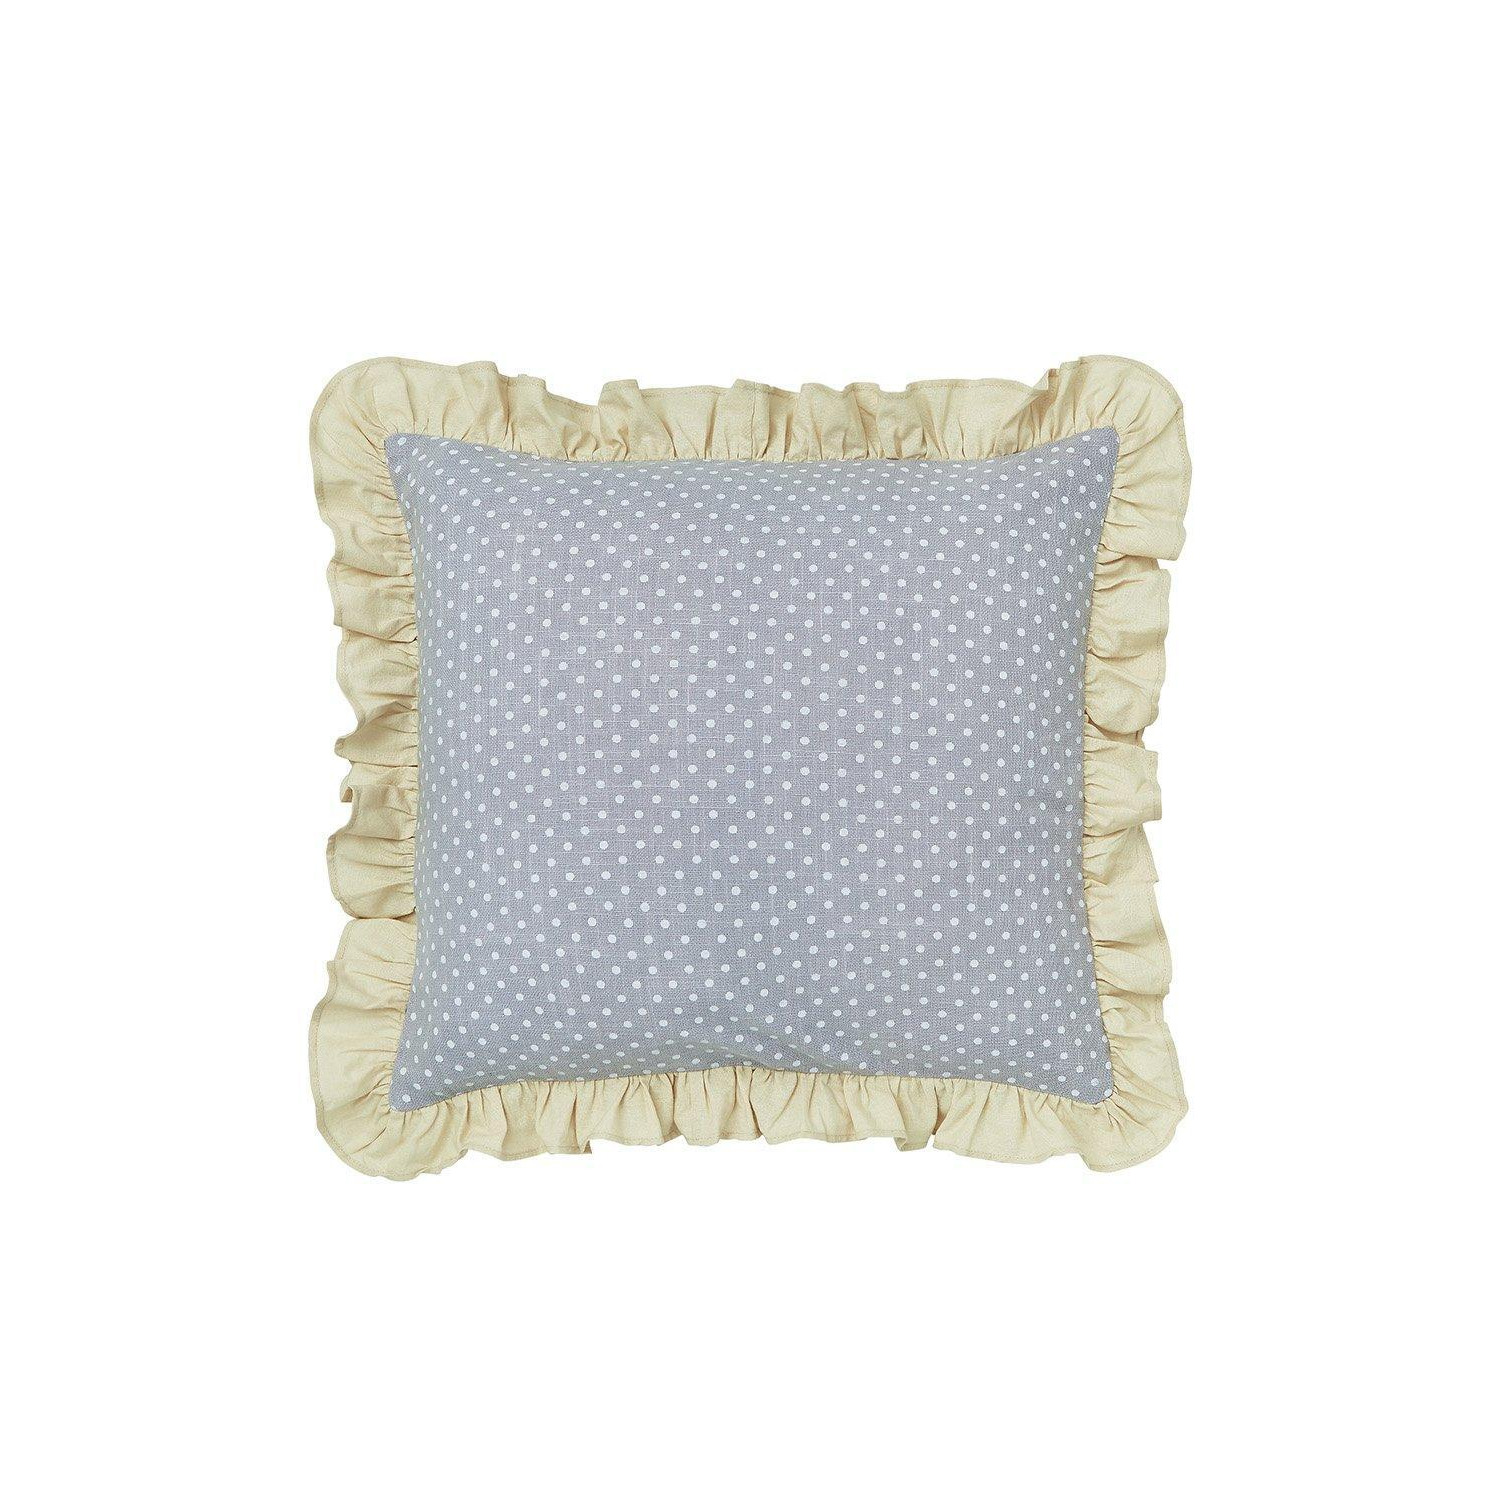 'Ness' Cotton Cushion - image 1